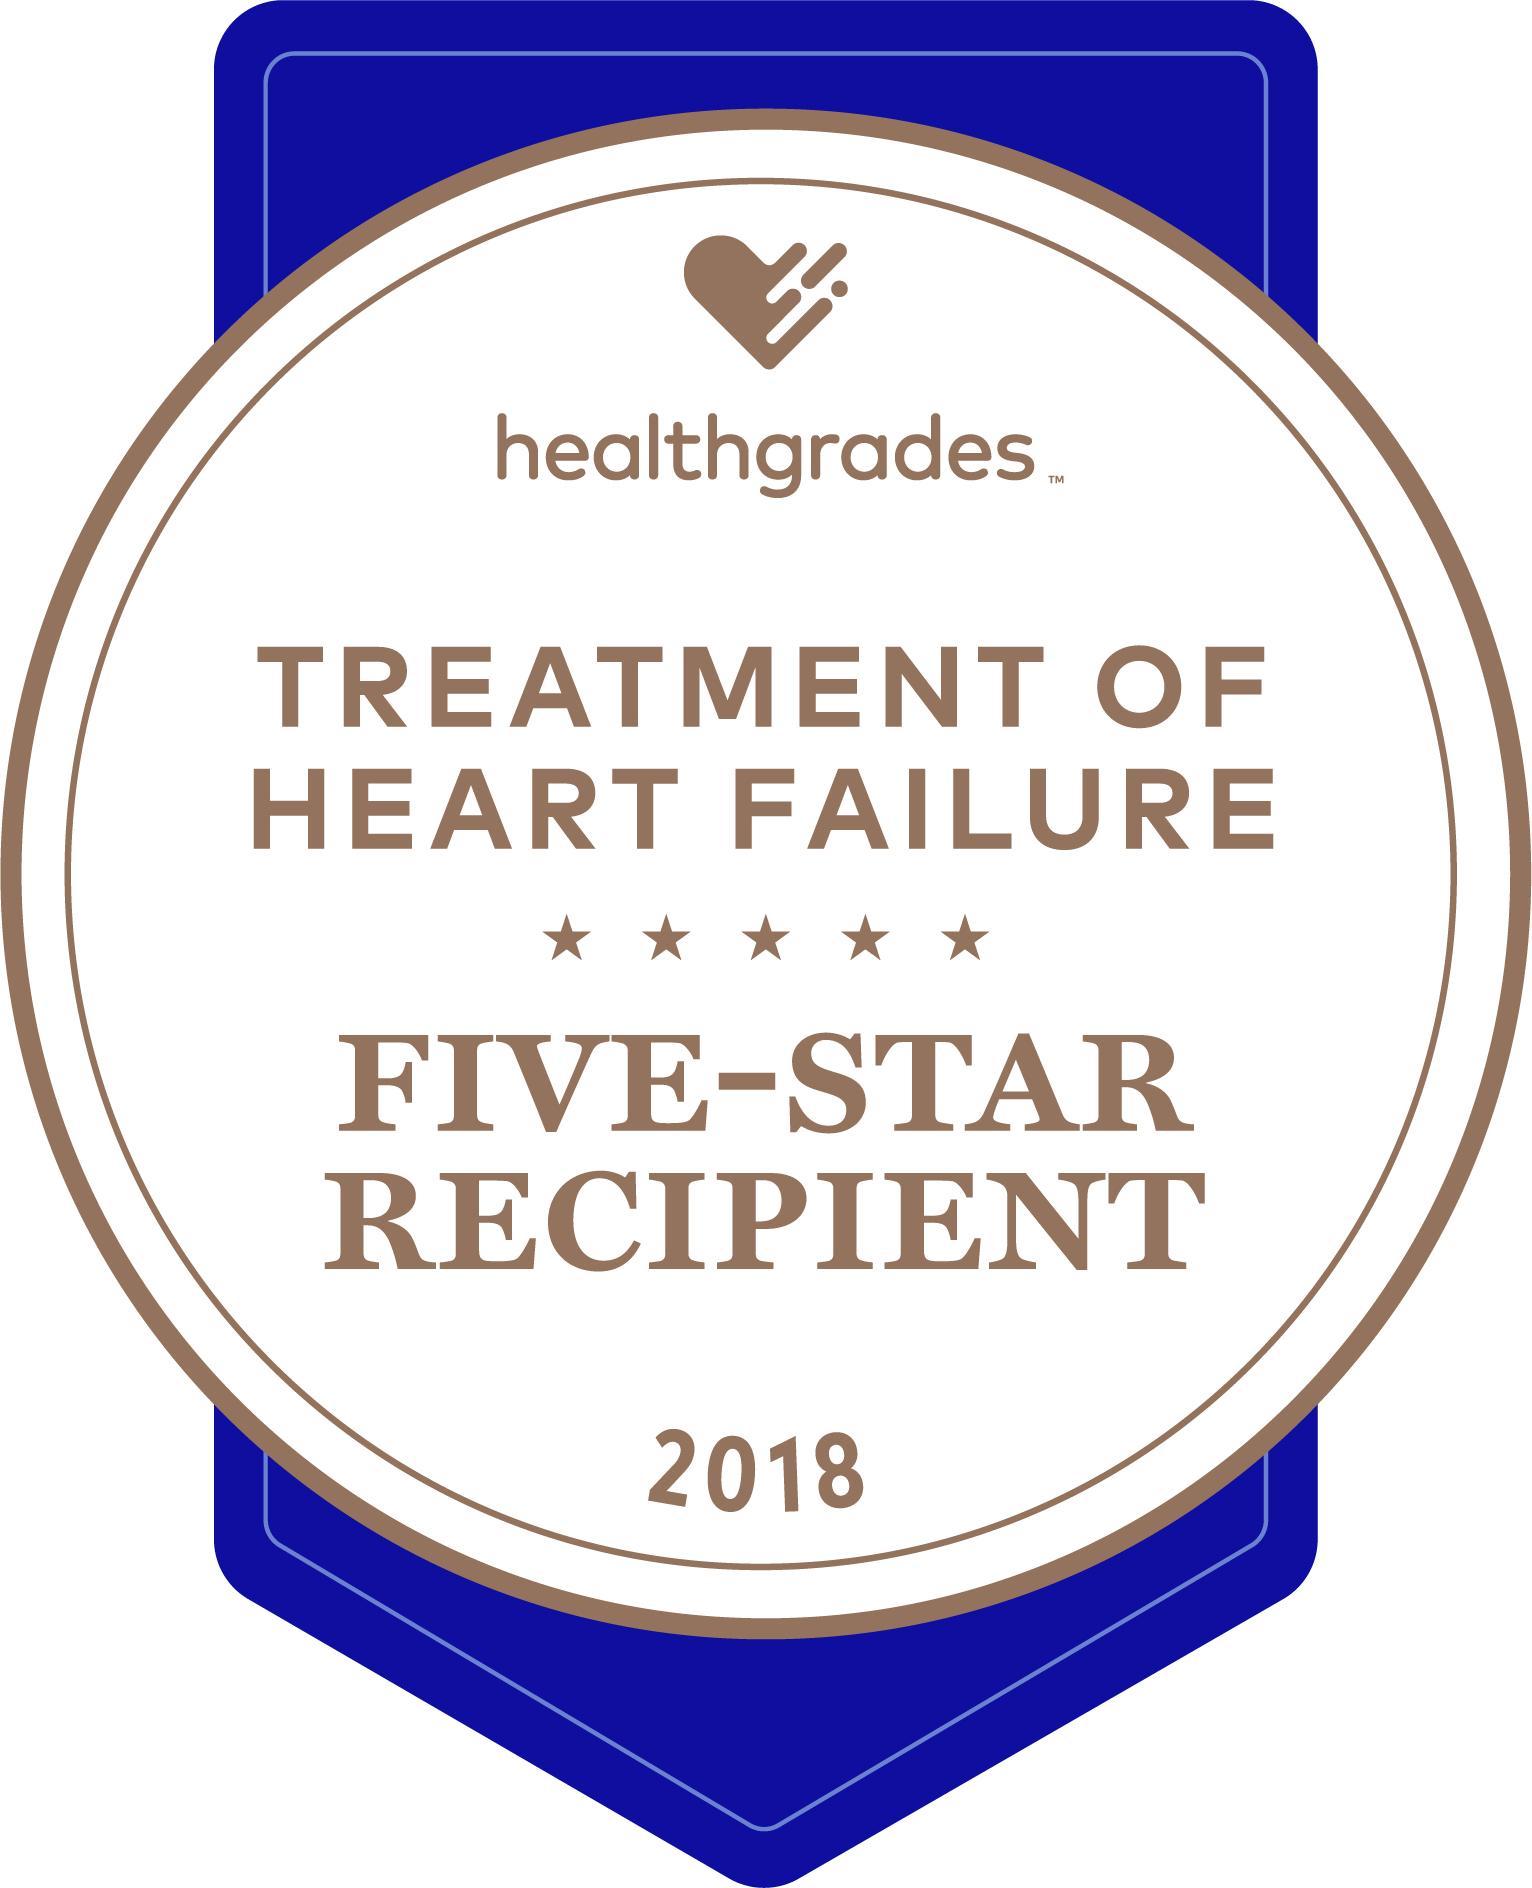 Healthgrades Heart Logo - Treatment of Heart Failure Five-Star Recipient - Healthgrades (2015 ...